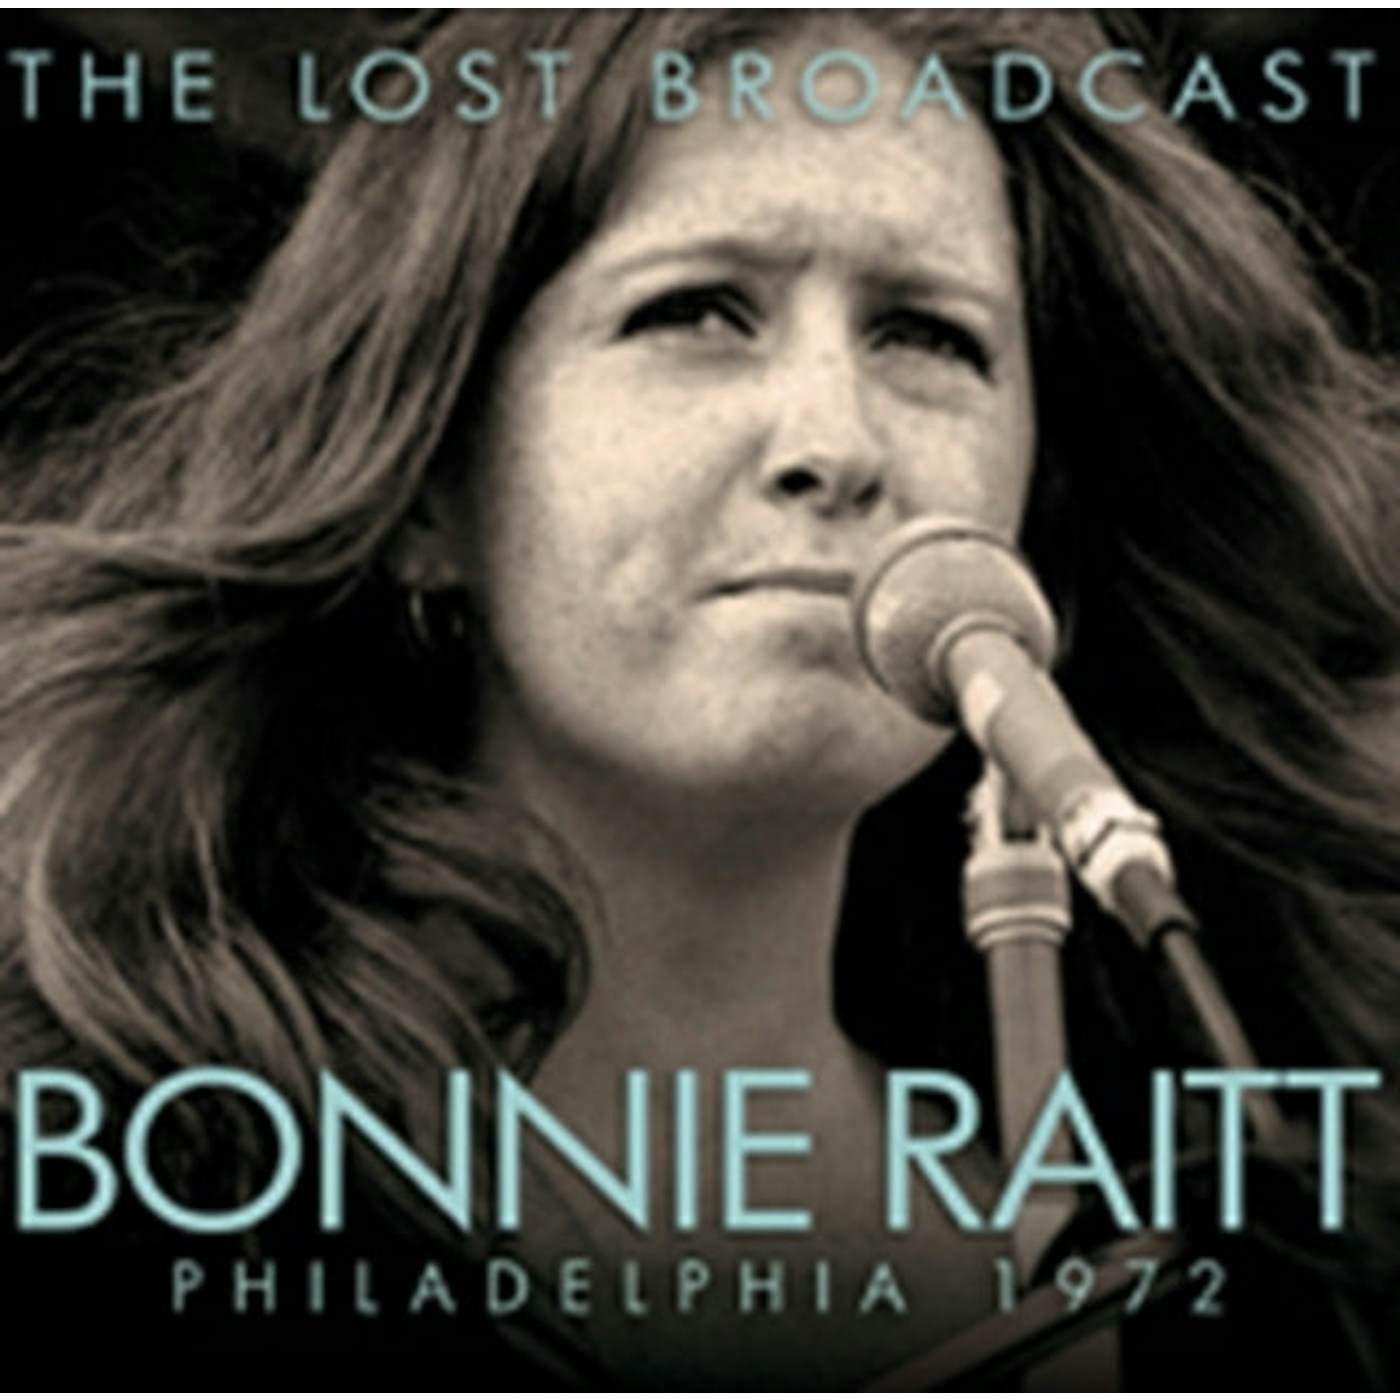 Bonnie Raitt CD - The Lost Broadcast